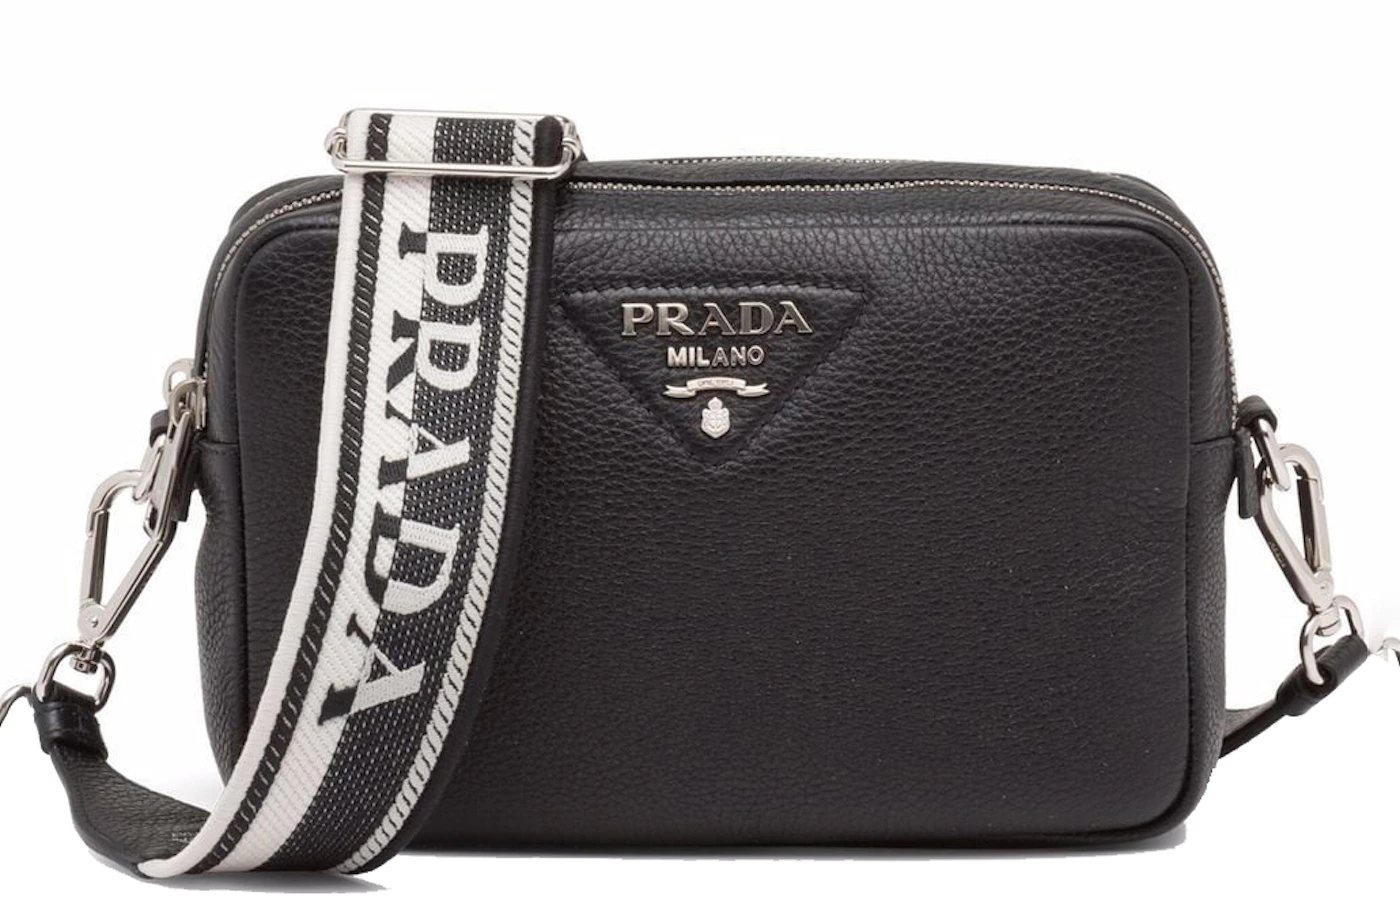 Prada - Flou White Leather Top Zip Camera Bag